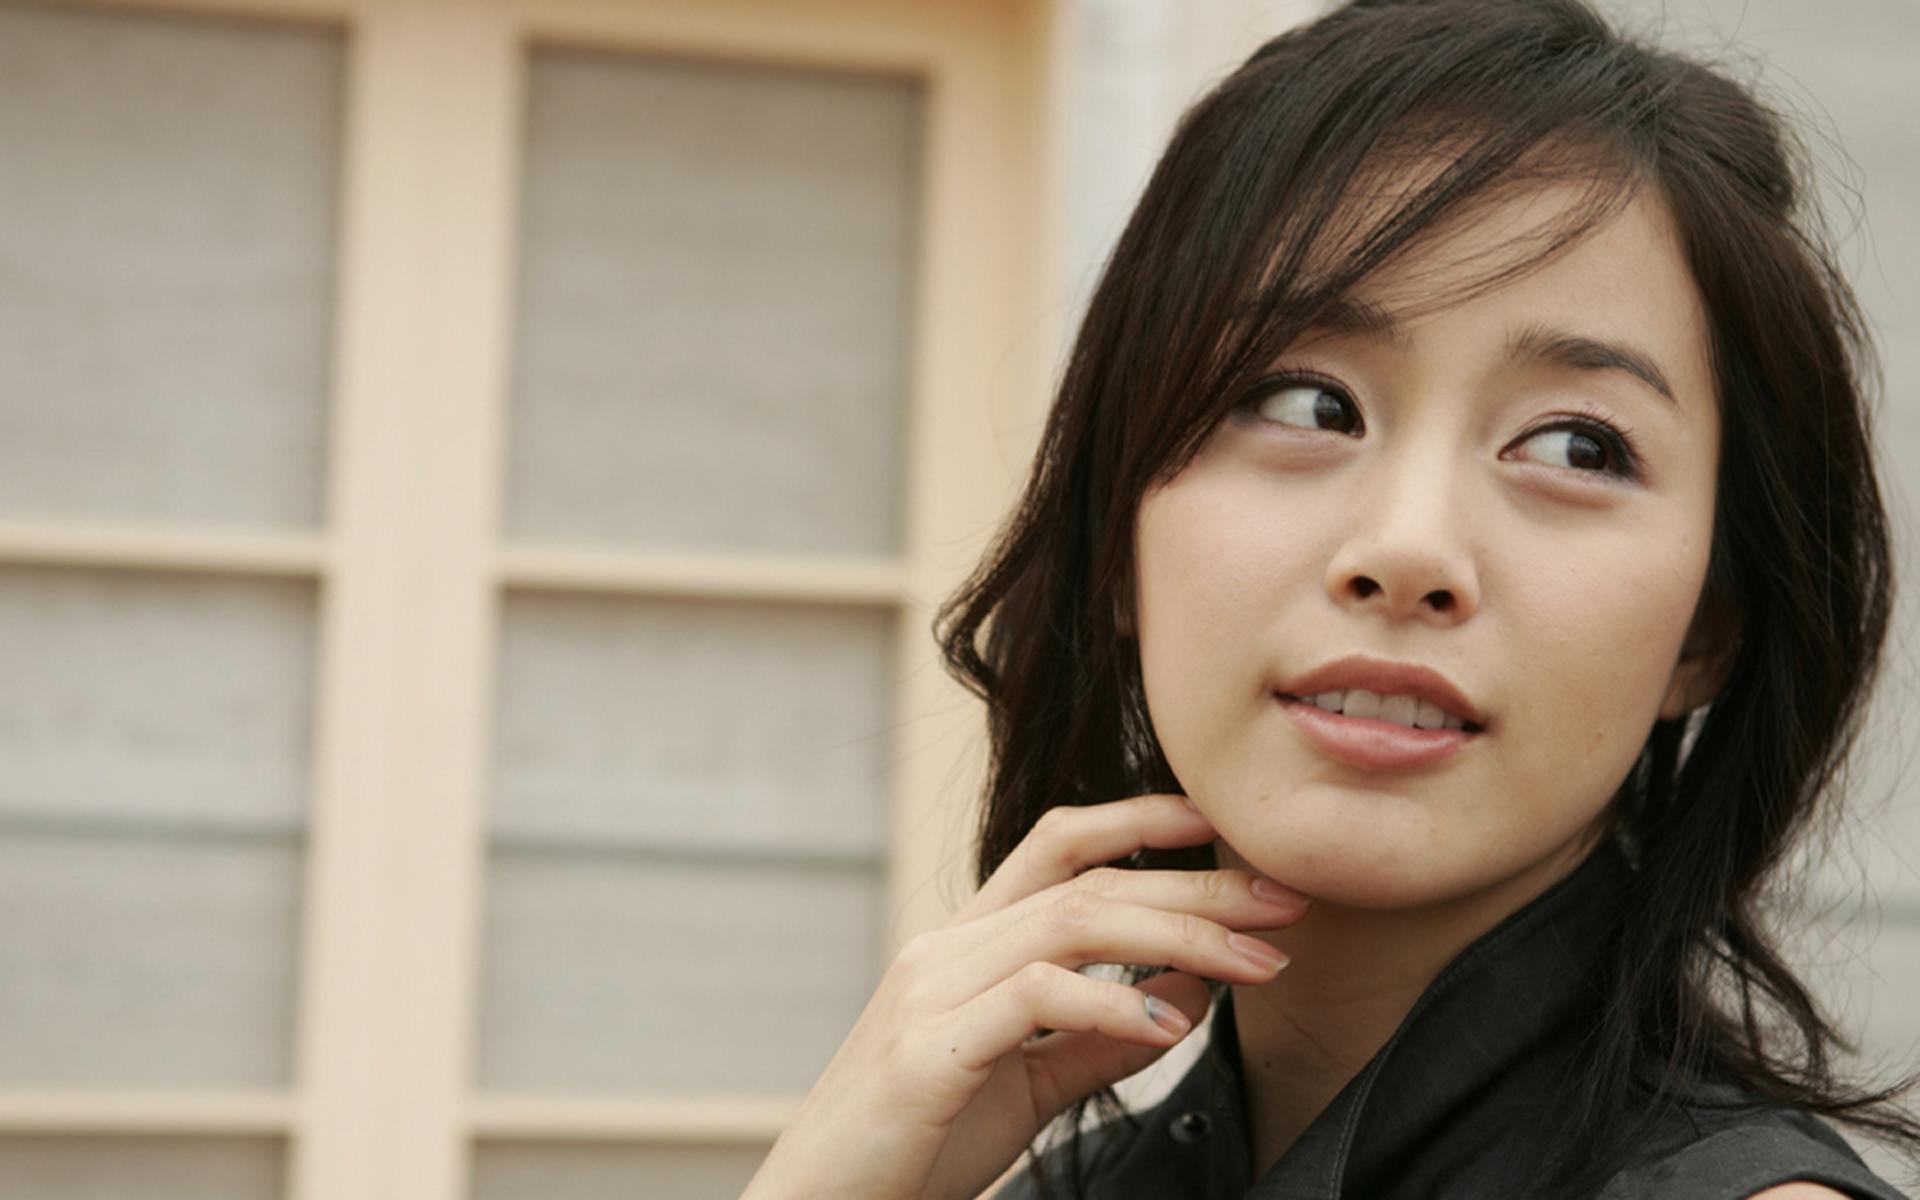 Poll ResultWe realised Kim Tae Hee is prettier than Jiyeon